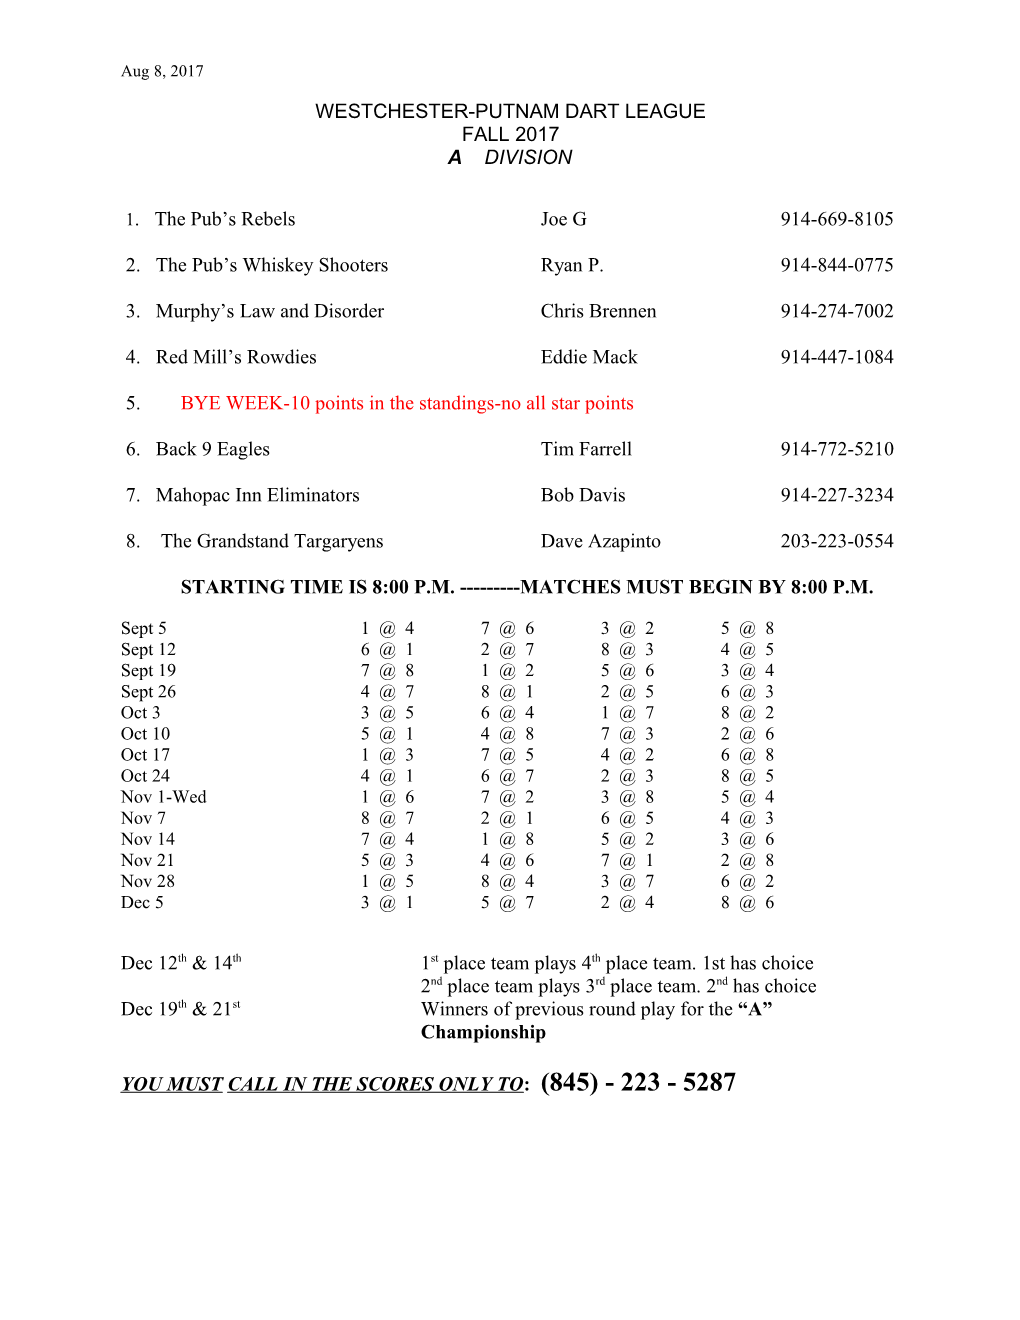 Westchester-Putnam Dart League s2